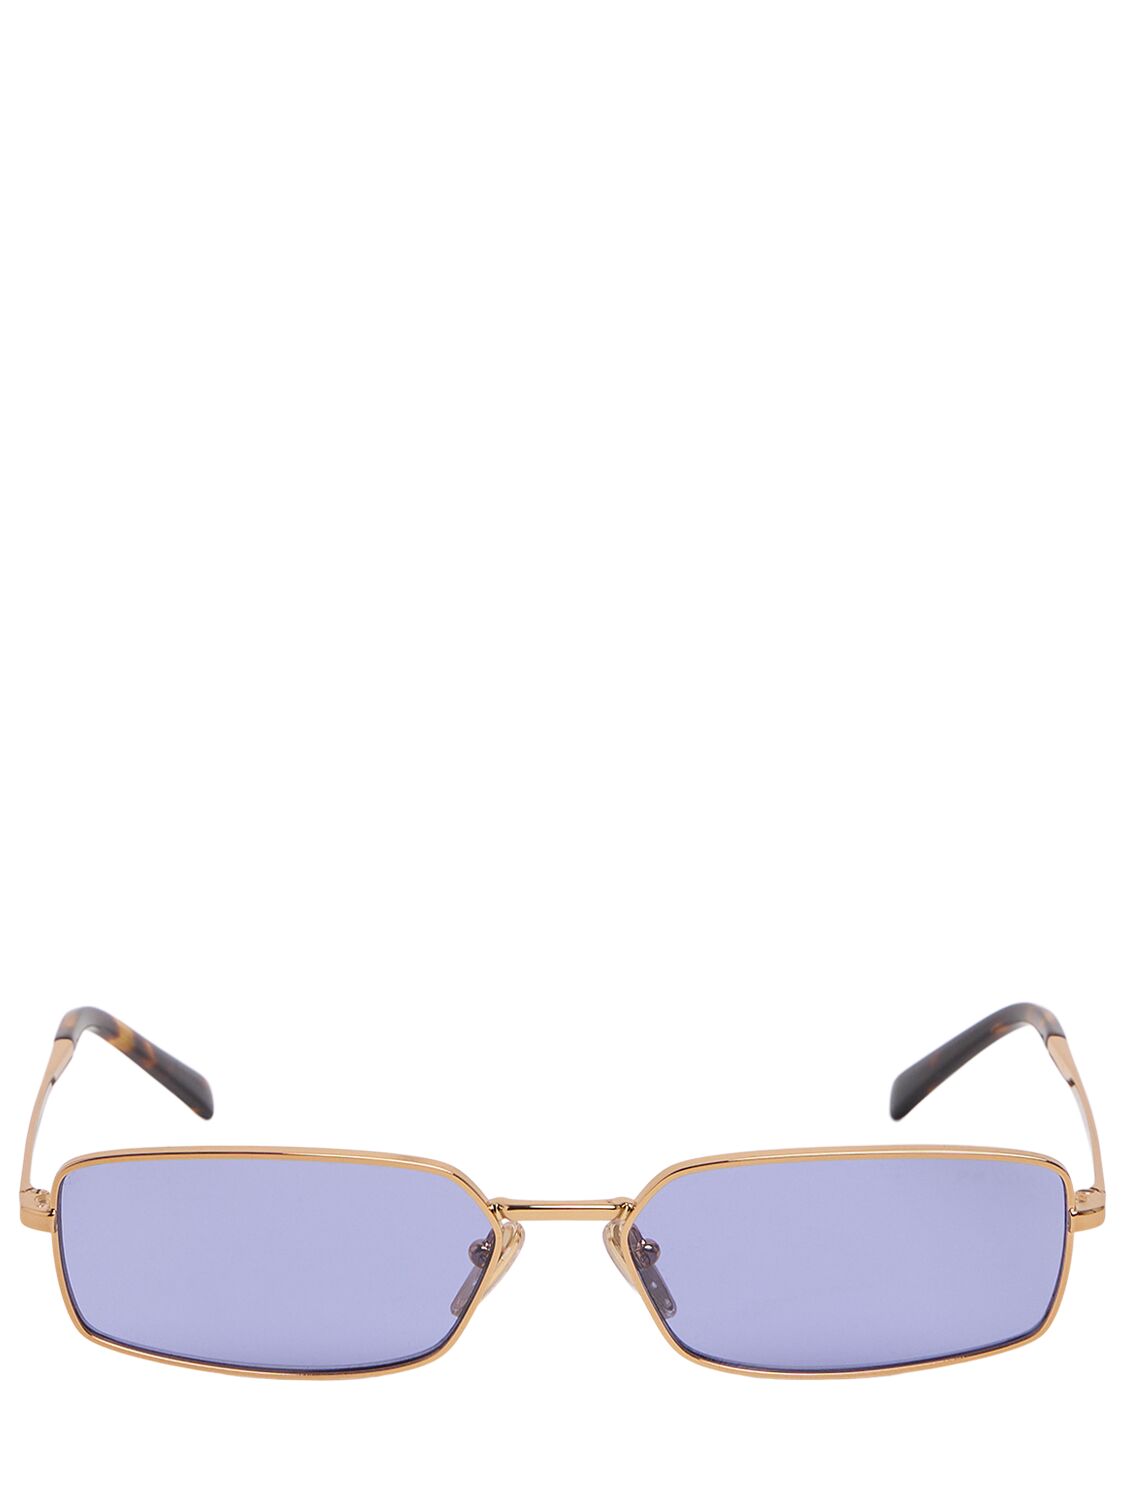 Prada Square Metal Sunglasses In Gold,purple